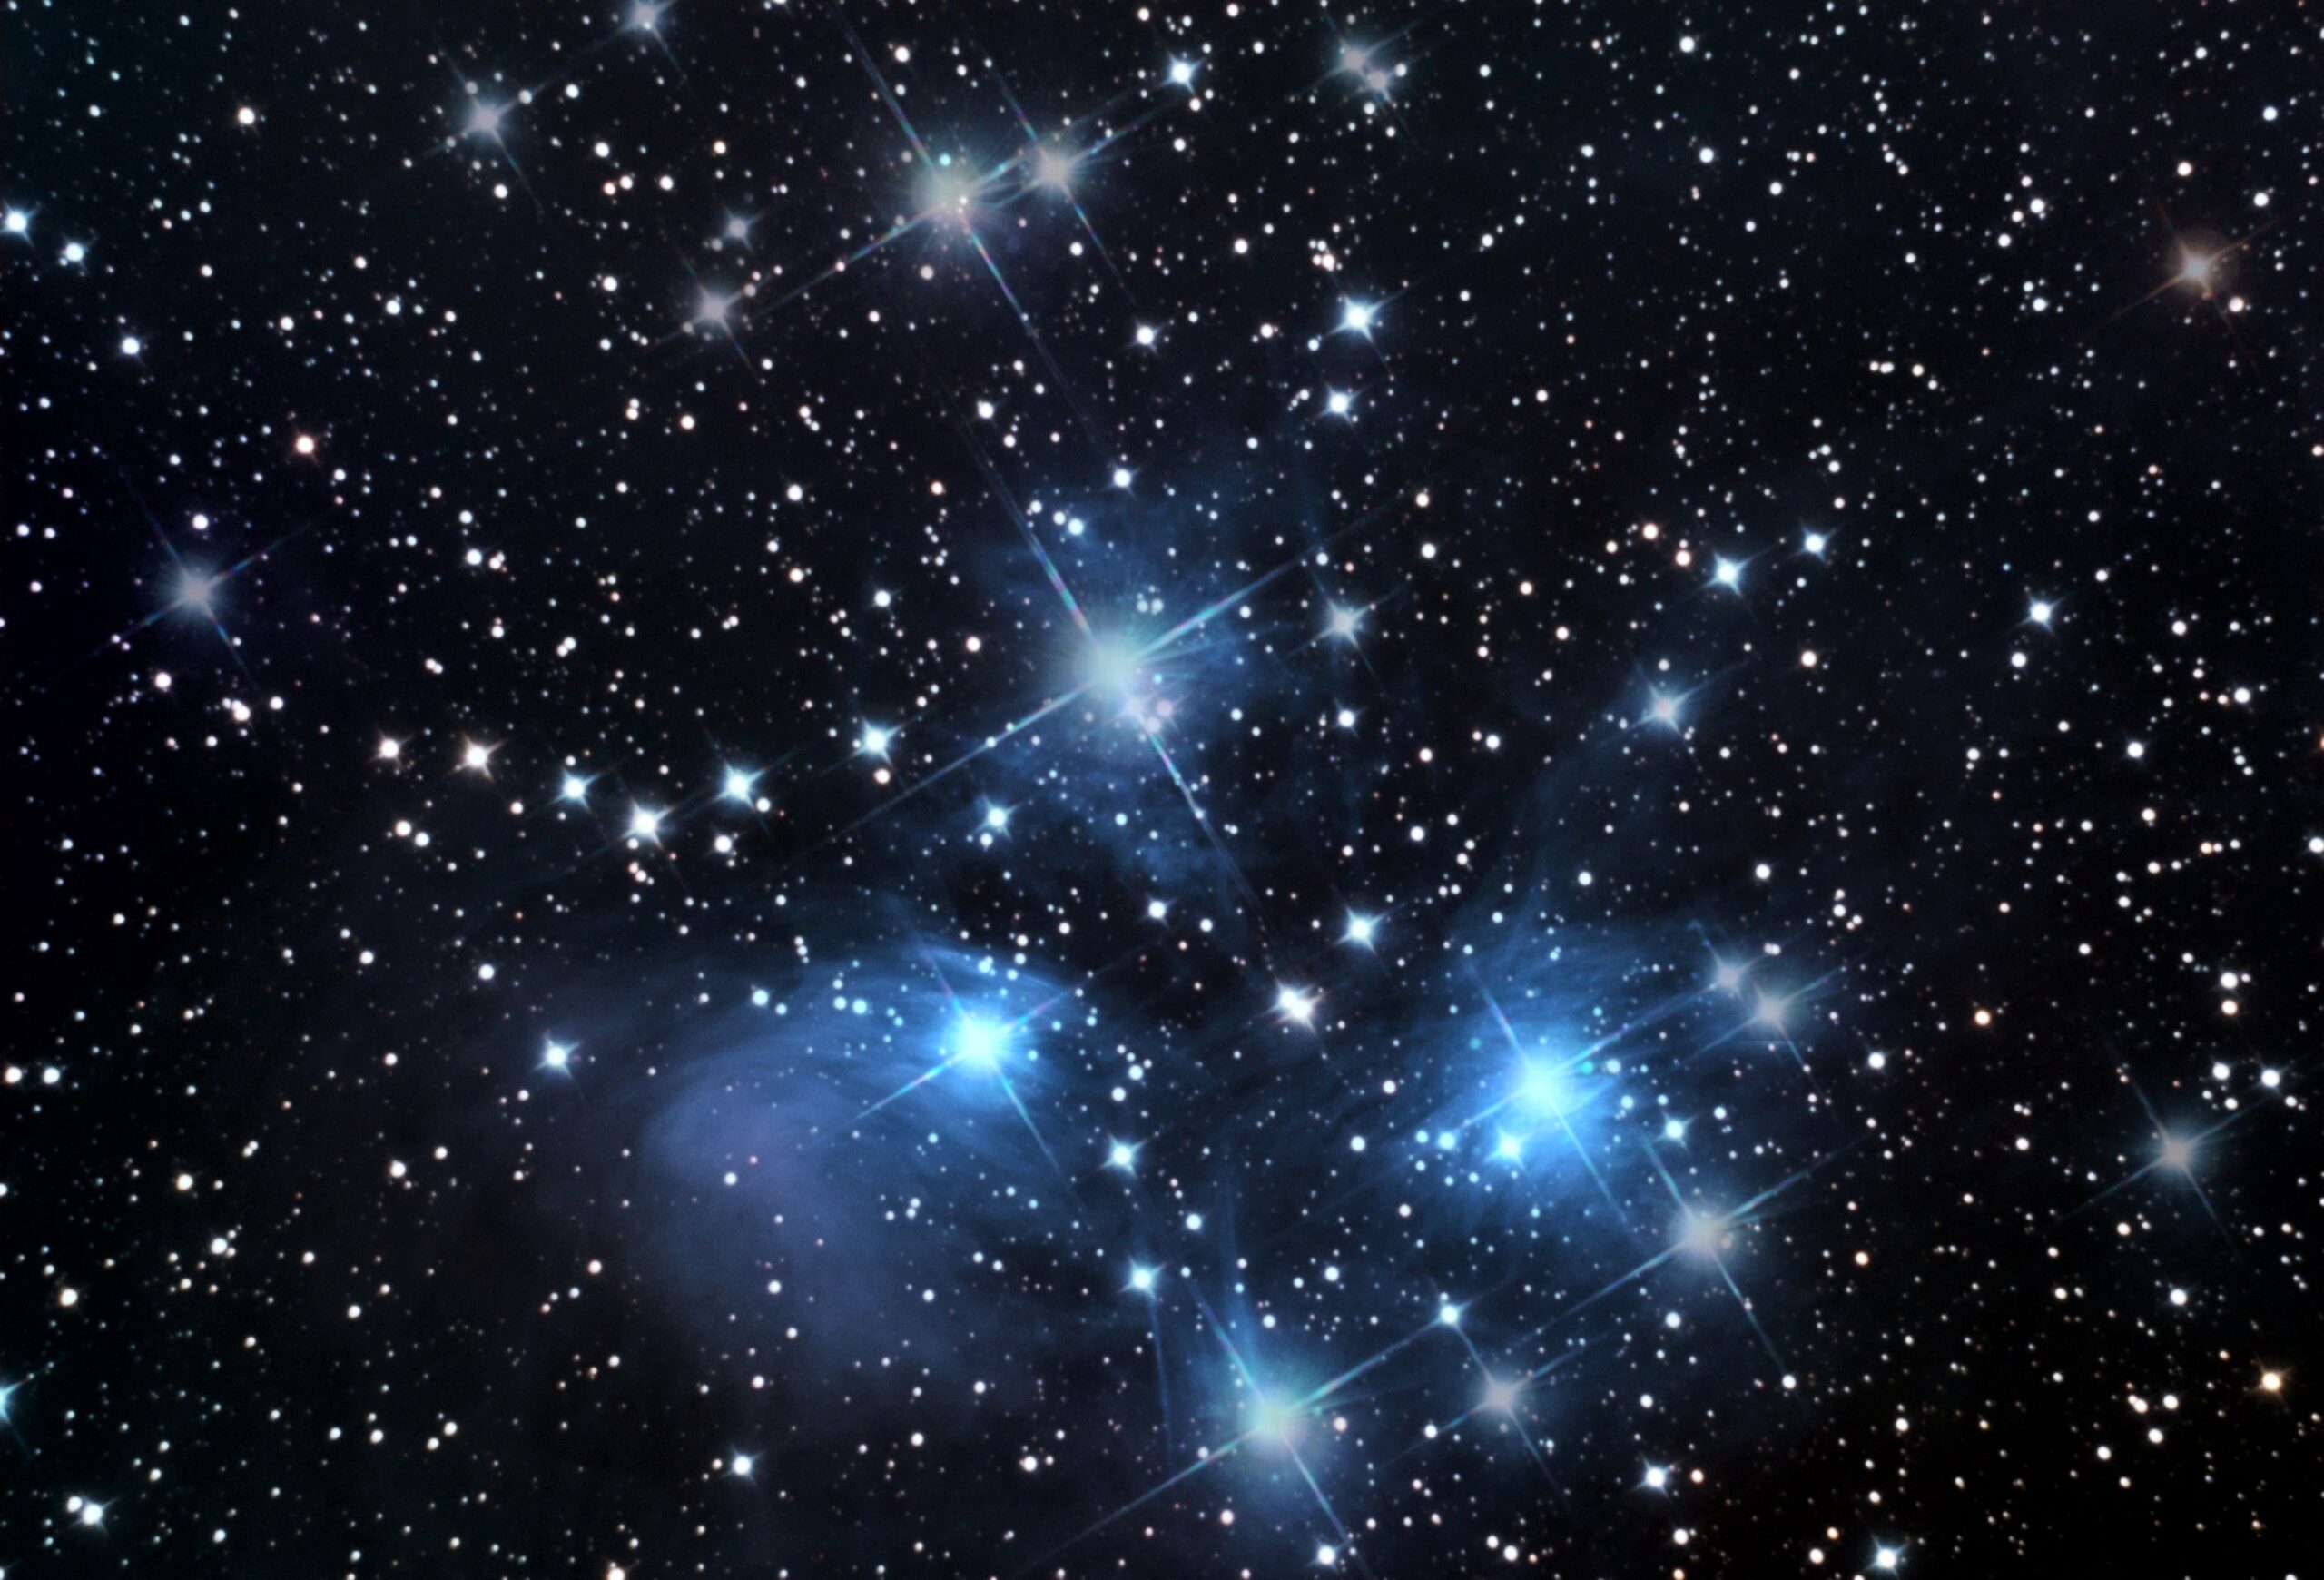 M45 Ammasso delle pleiadi